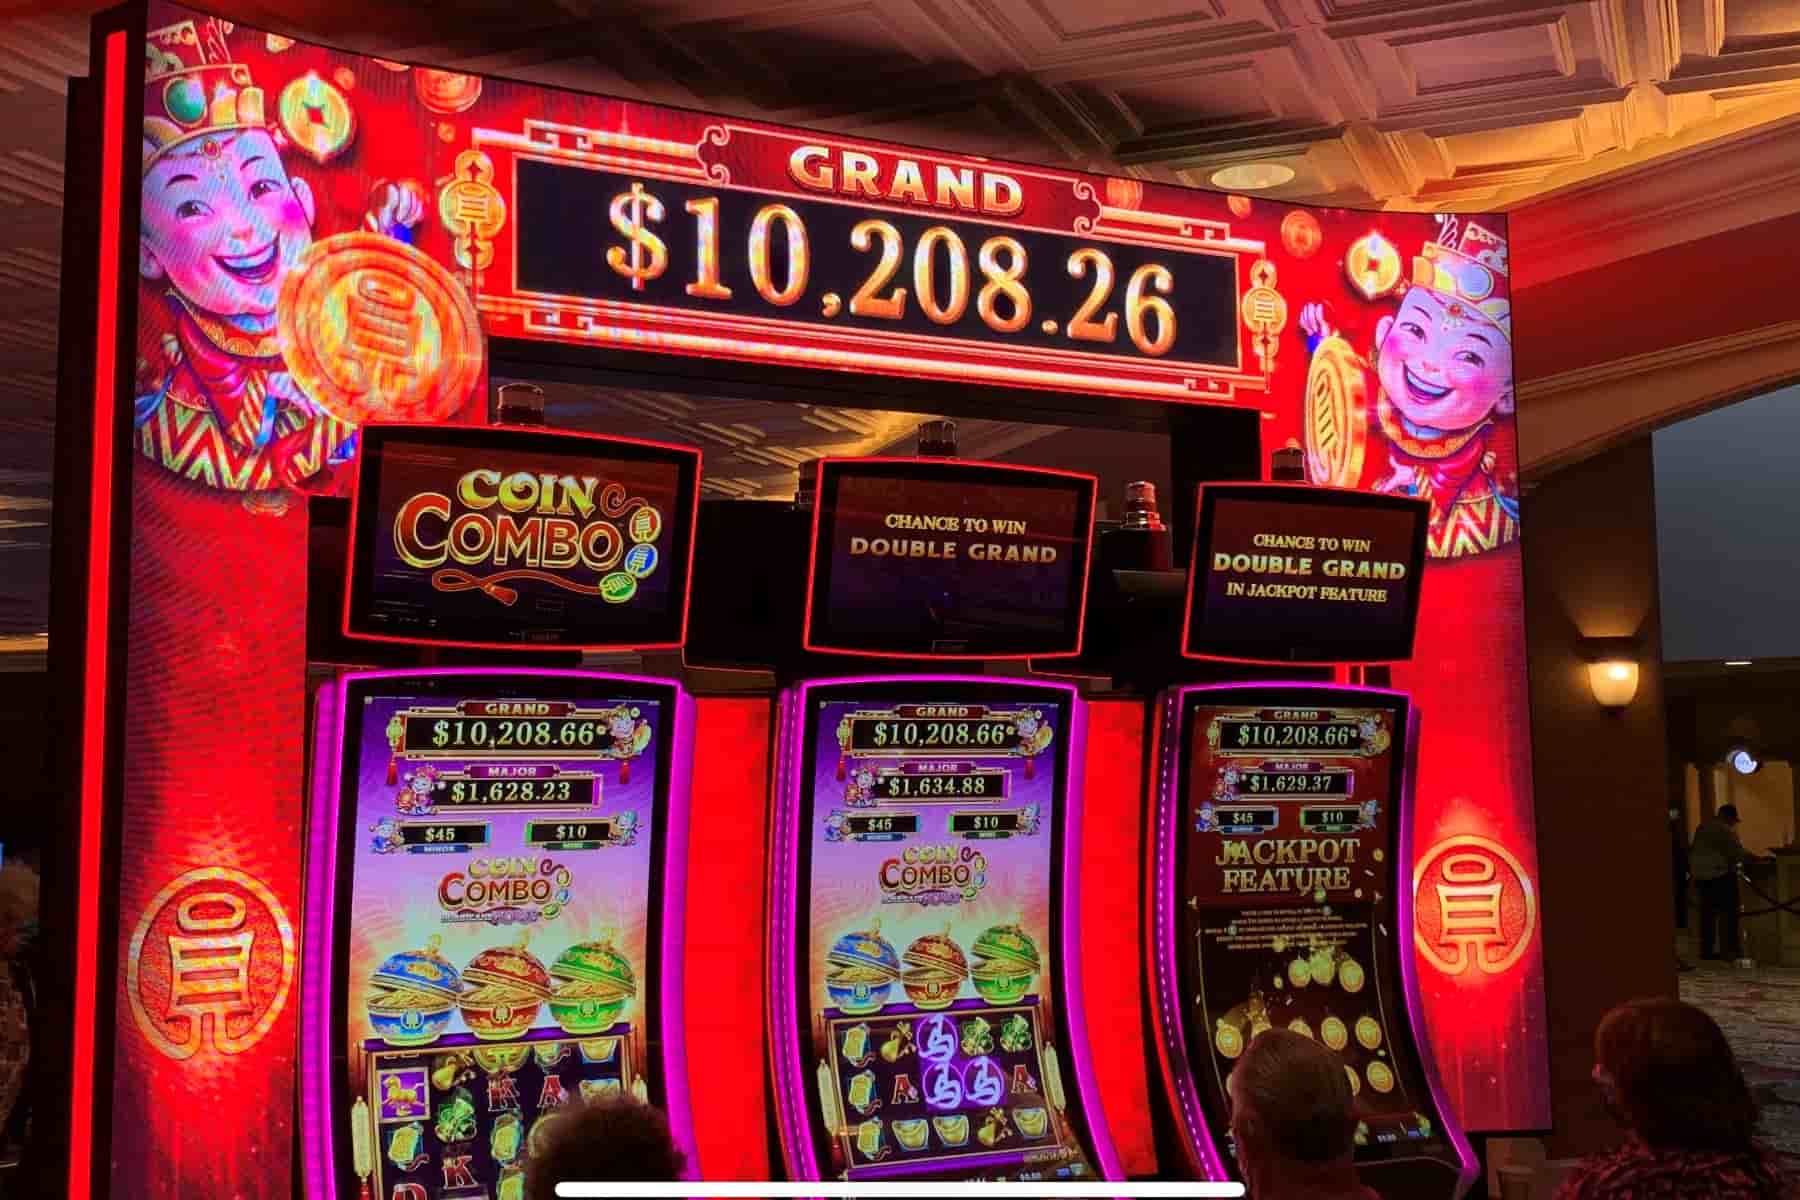 $10,208.26 jackpot win on Coin Combo slot machine